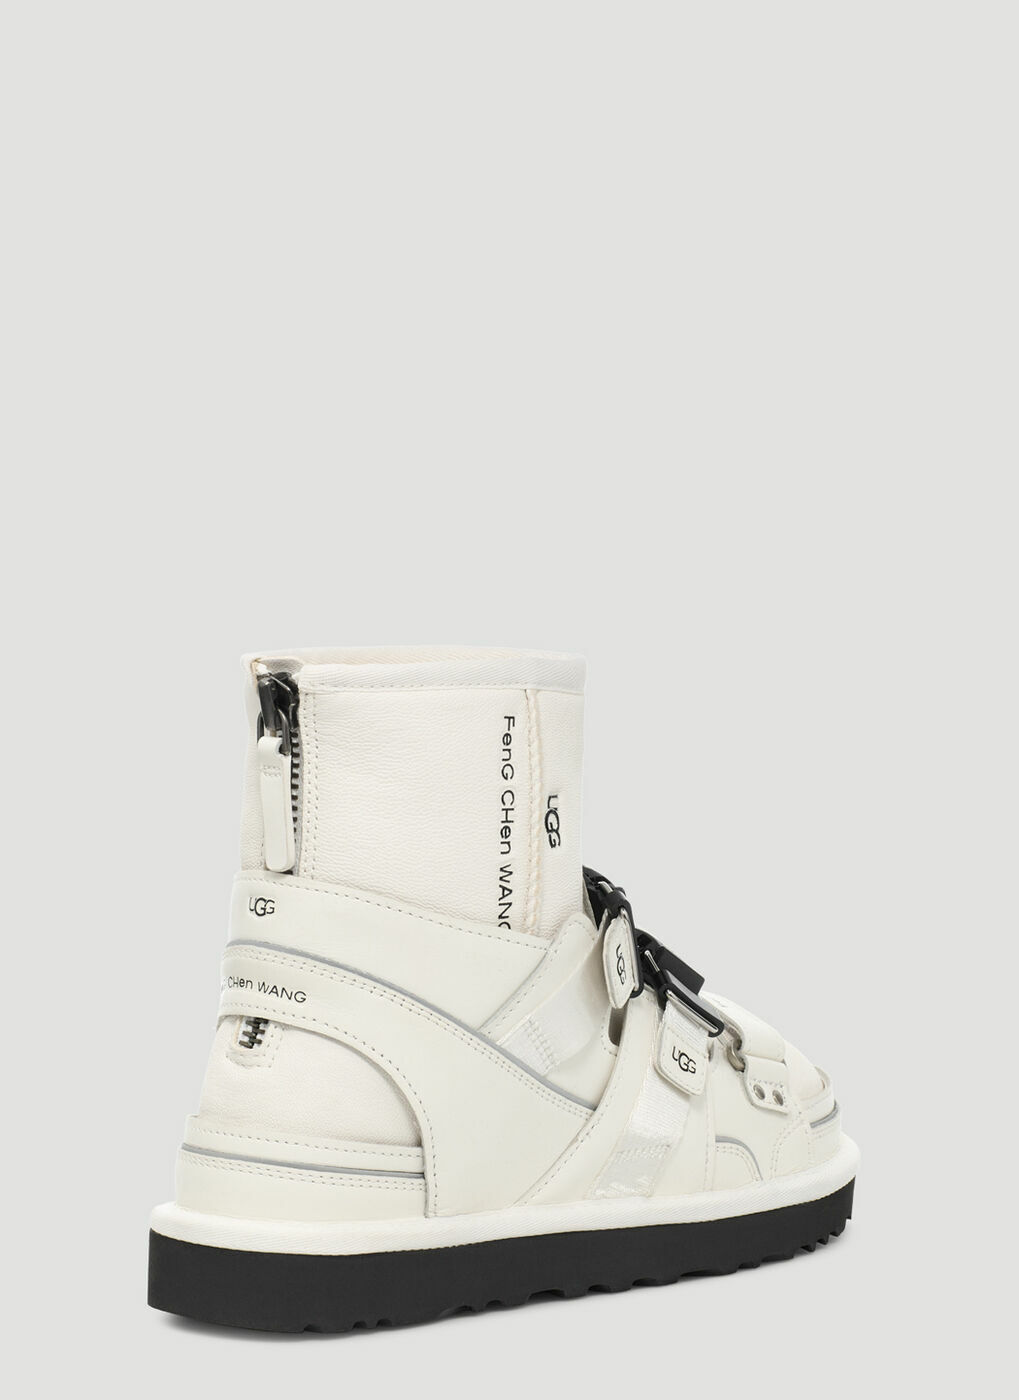 UGG x Feng Chen Wang - Modular Sandal Boots in White